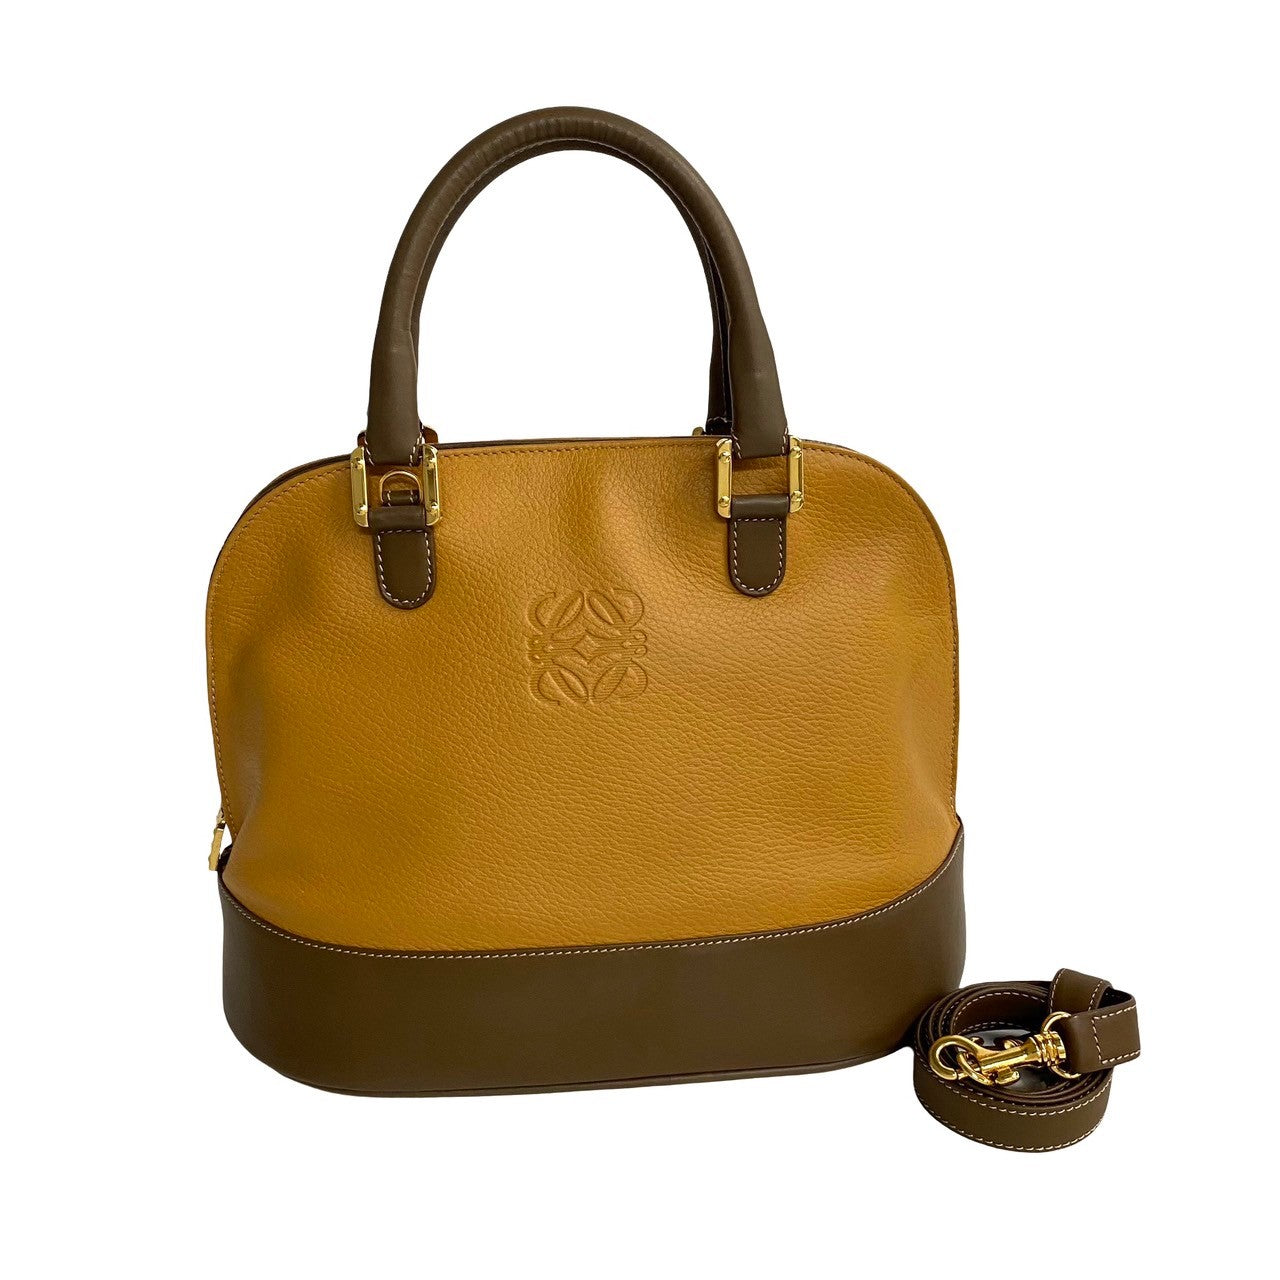 Loewe Leather Handbag Leather Handbag in Excellent condition